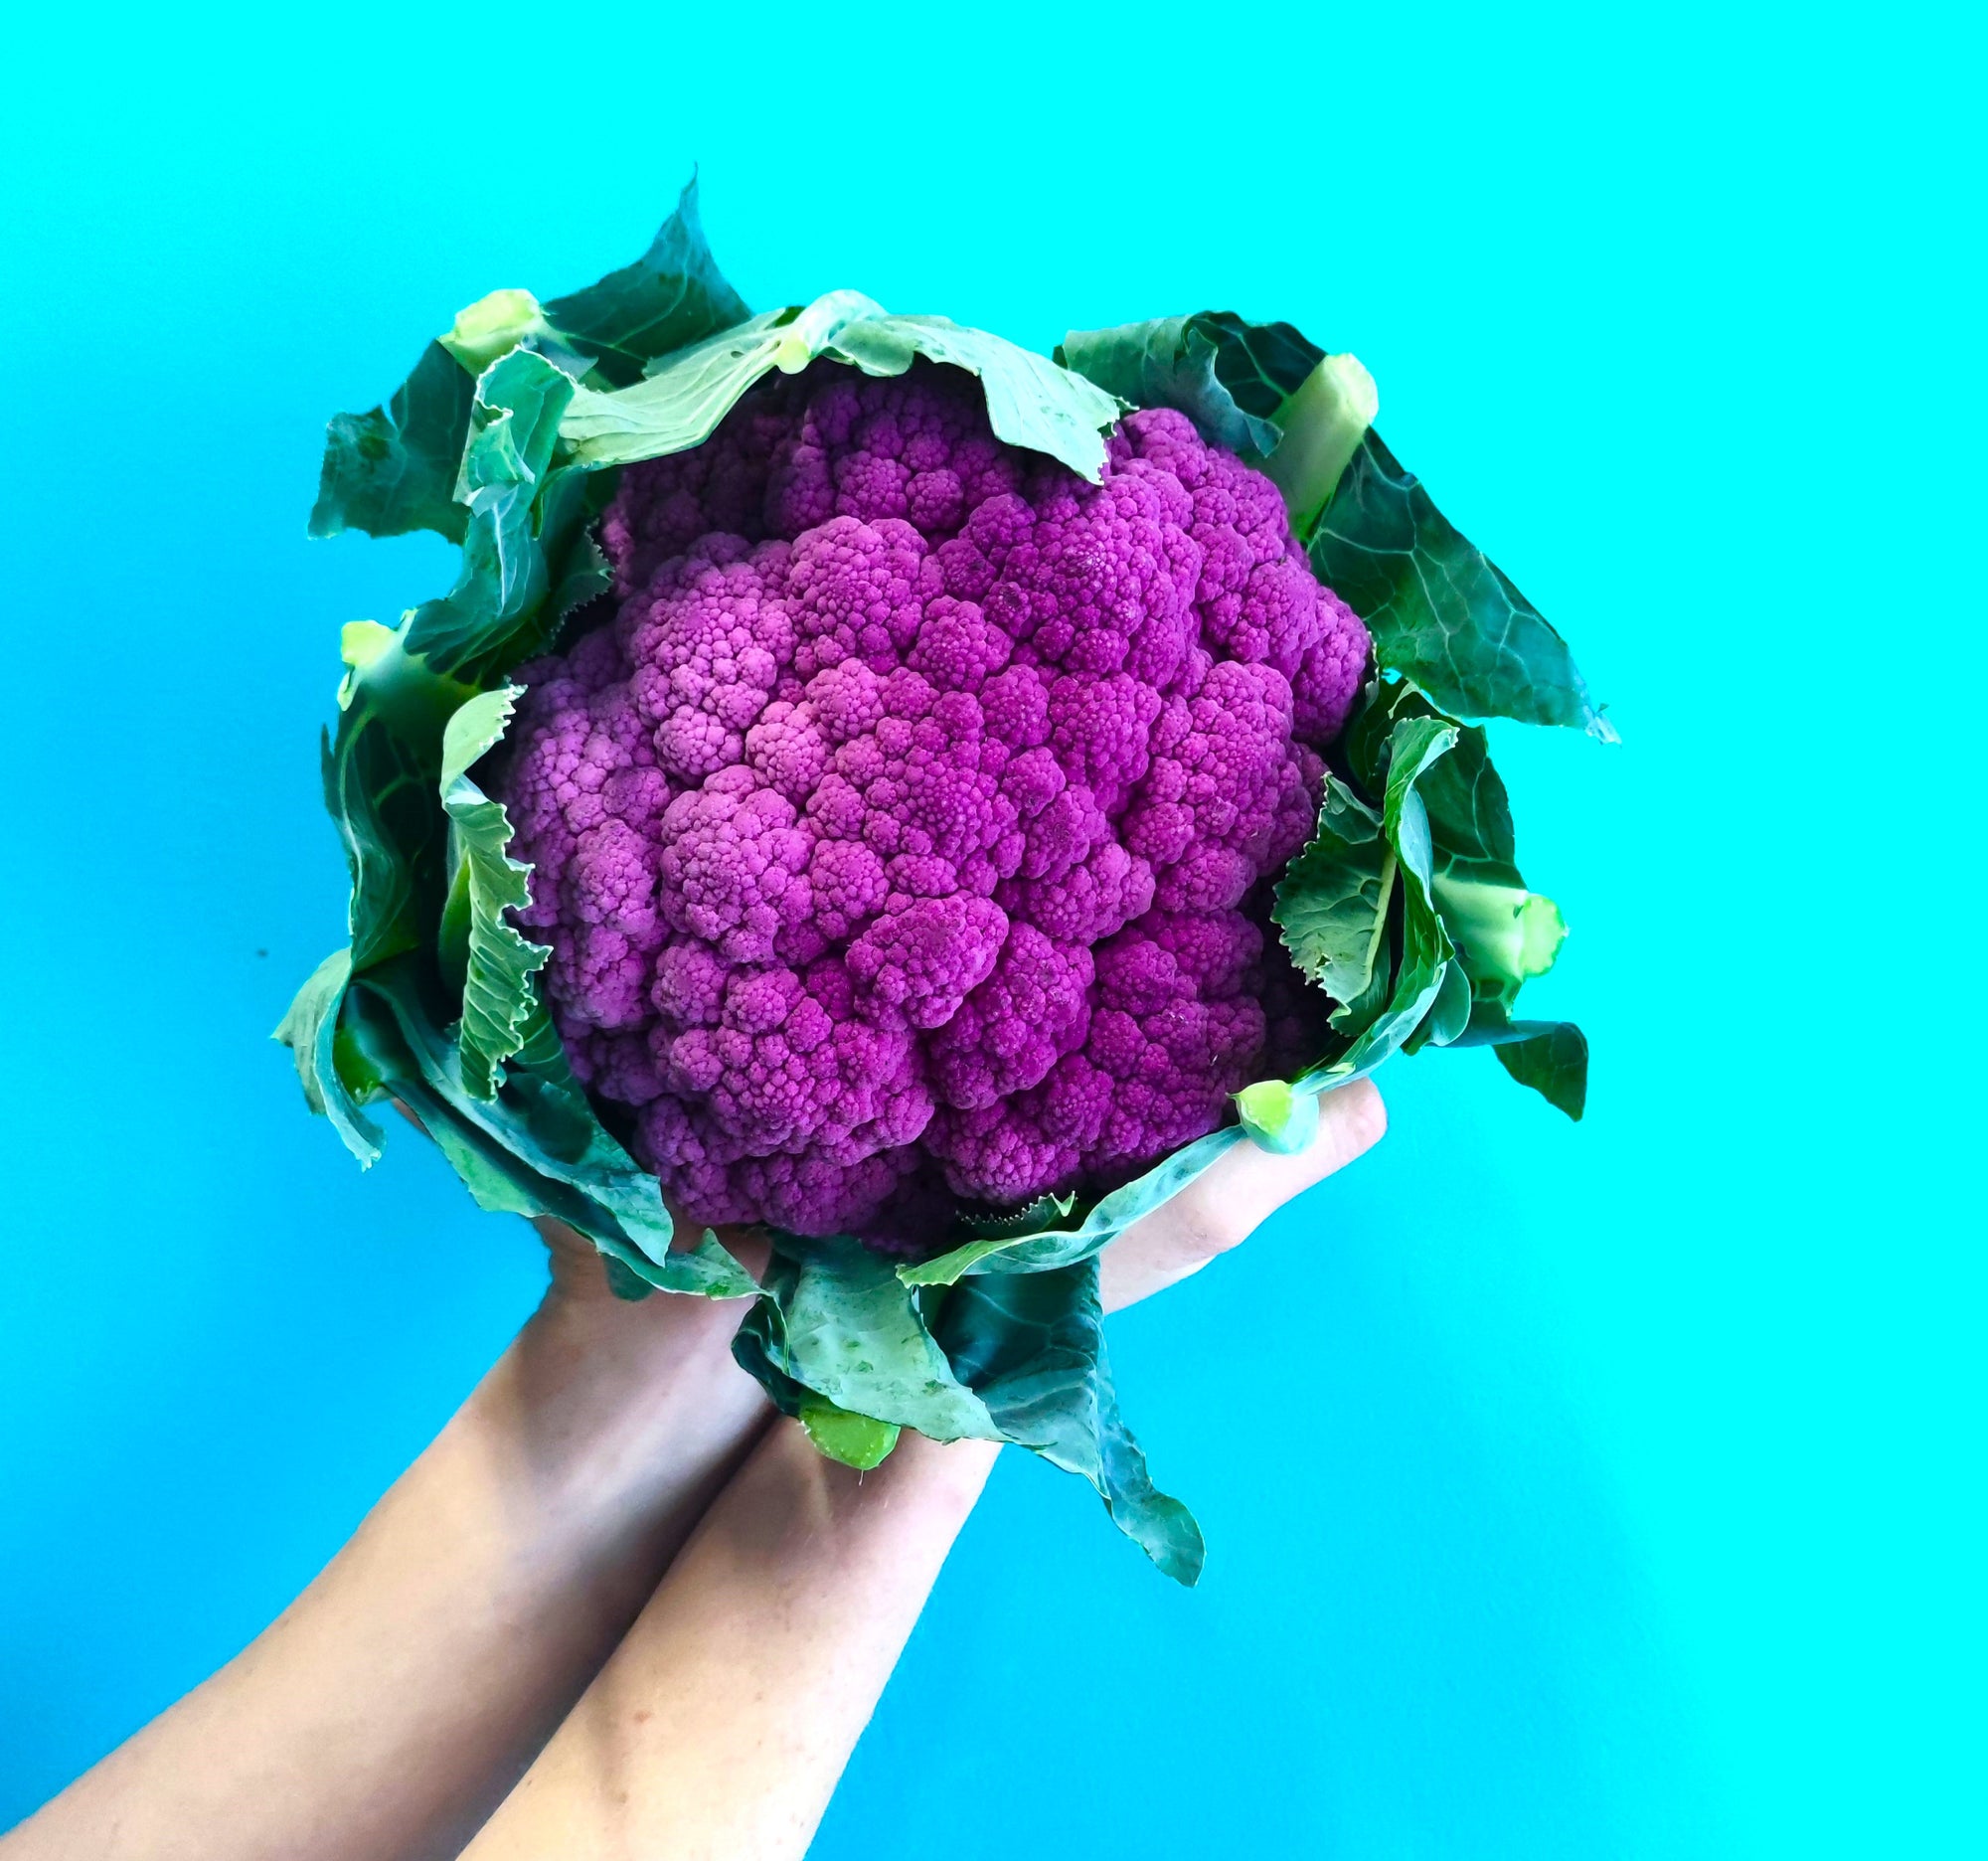 Add x1 Purple Cauliflower